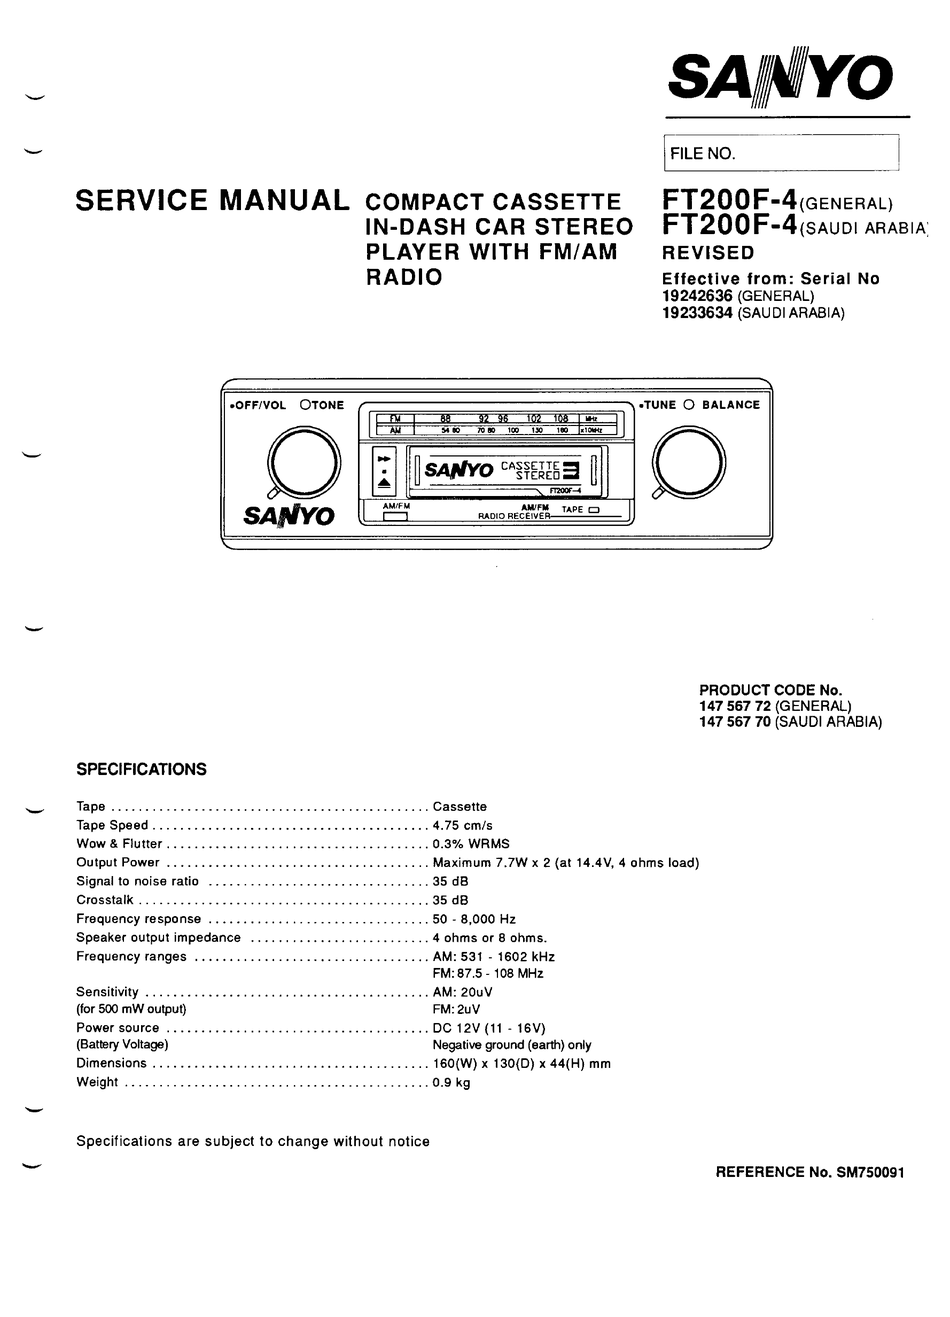 Sanyo Ft200f 4 Service Manual Pdf